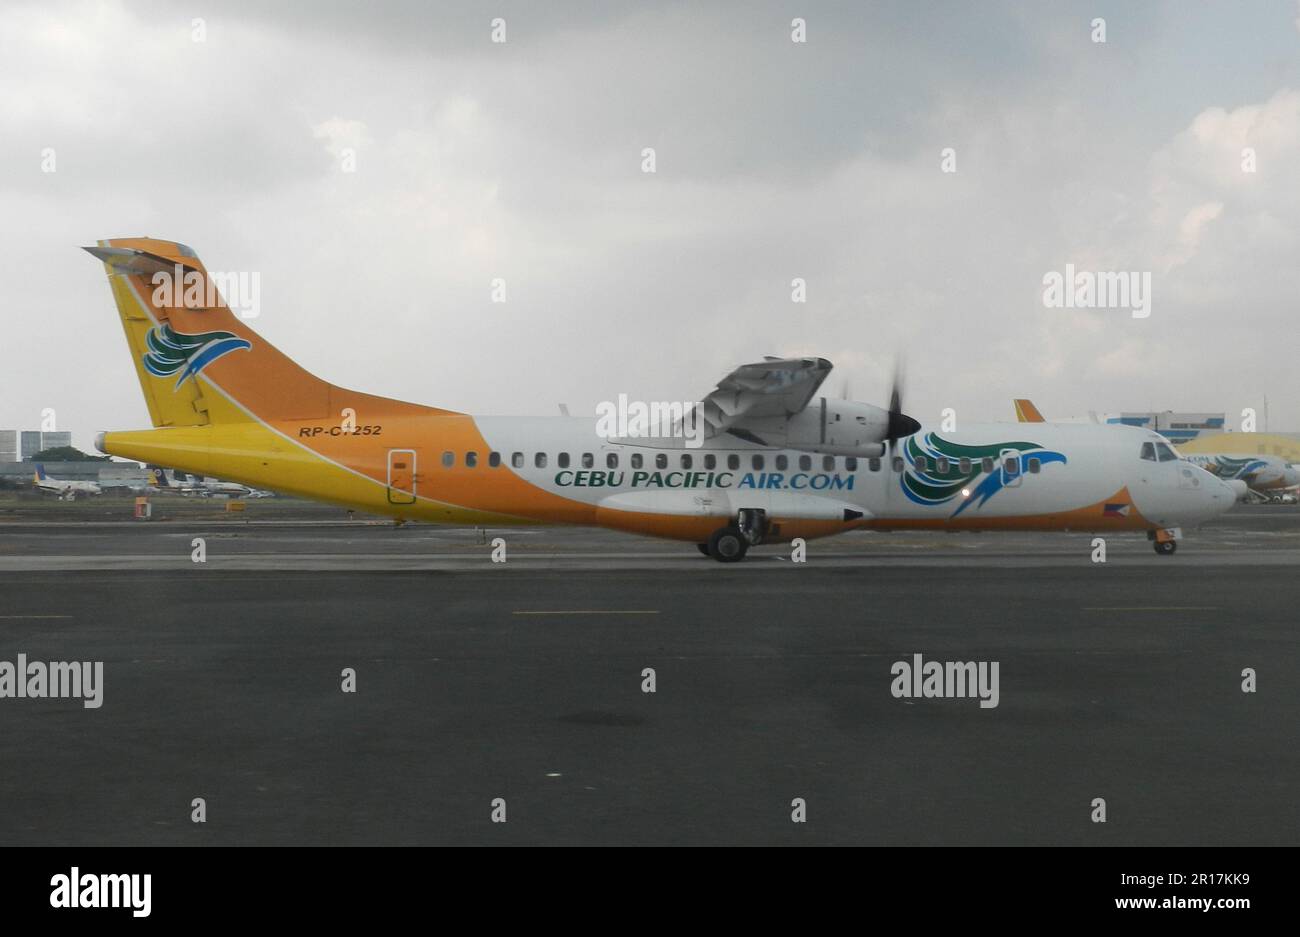 RP-C7252  ATR-72-500 of Cebu Pacific Air at Manila airport. Stock Photo